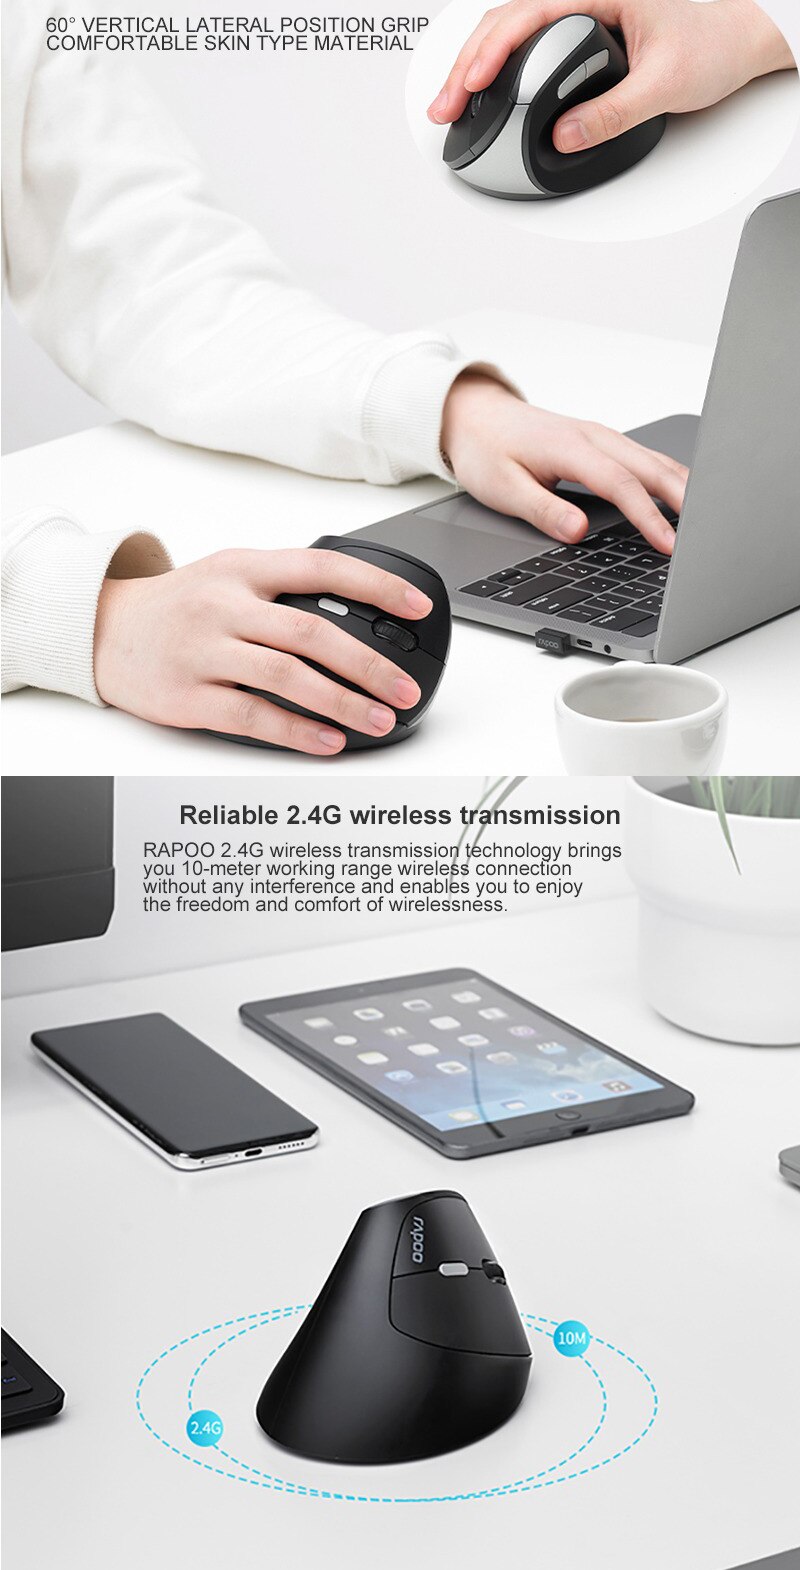 Rapoo MV20 Wireless Vertical mouse - 6-Button - Nano USB receiver size - 2.4G wireless technology - adjustable DPI buttons - Amman Jordan - Pccircle